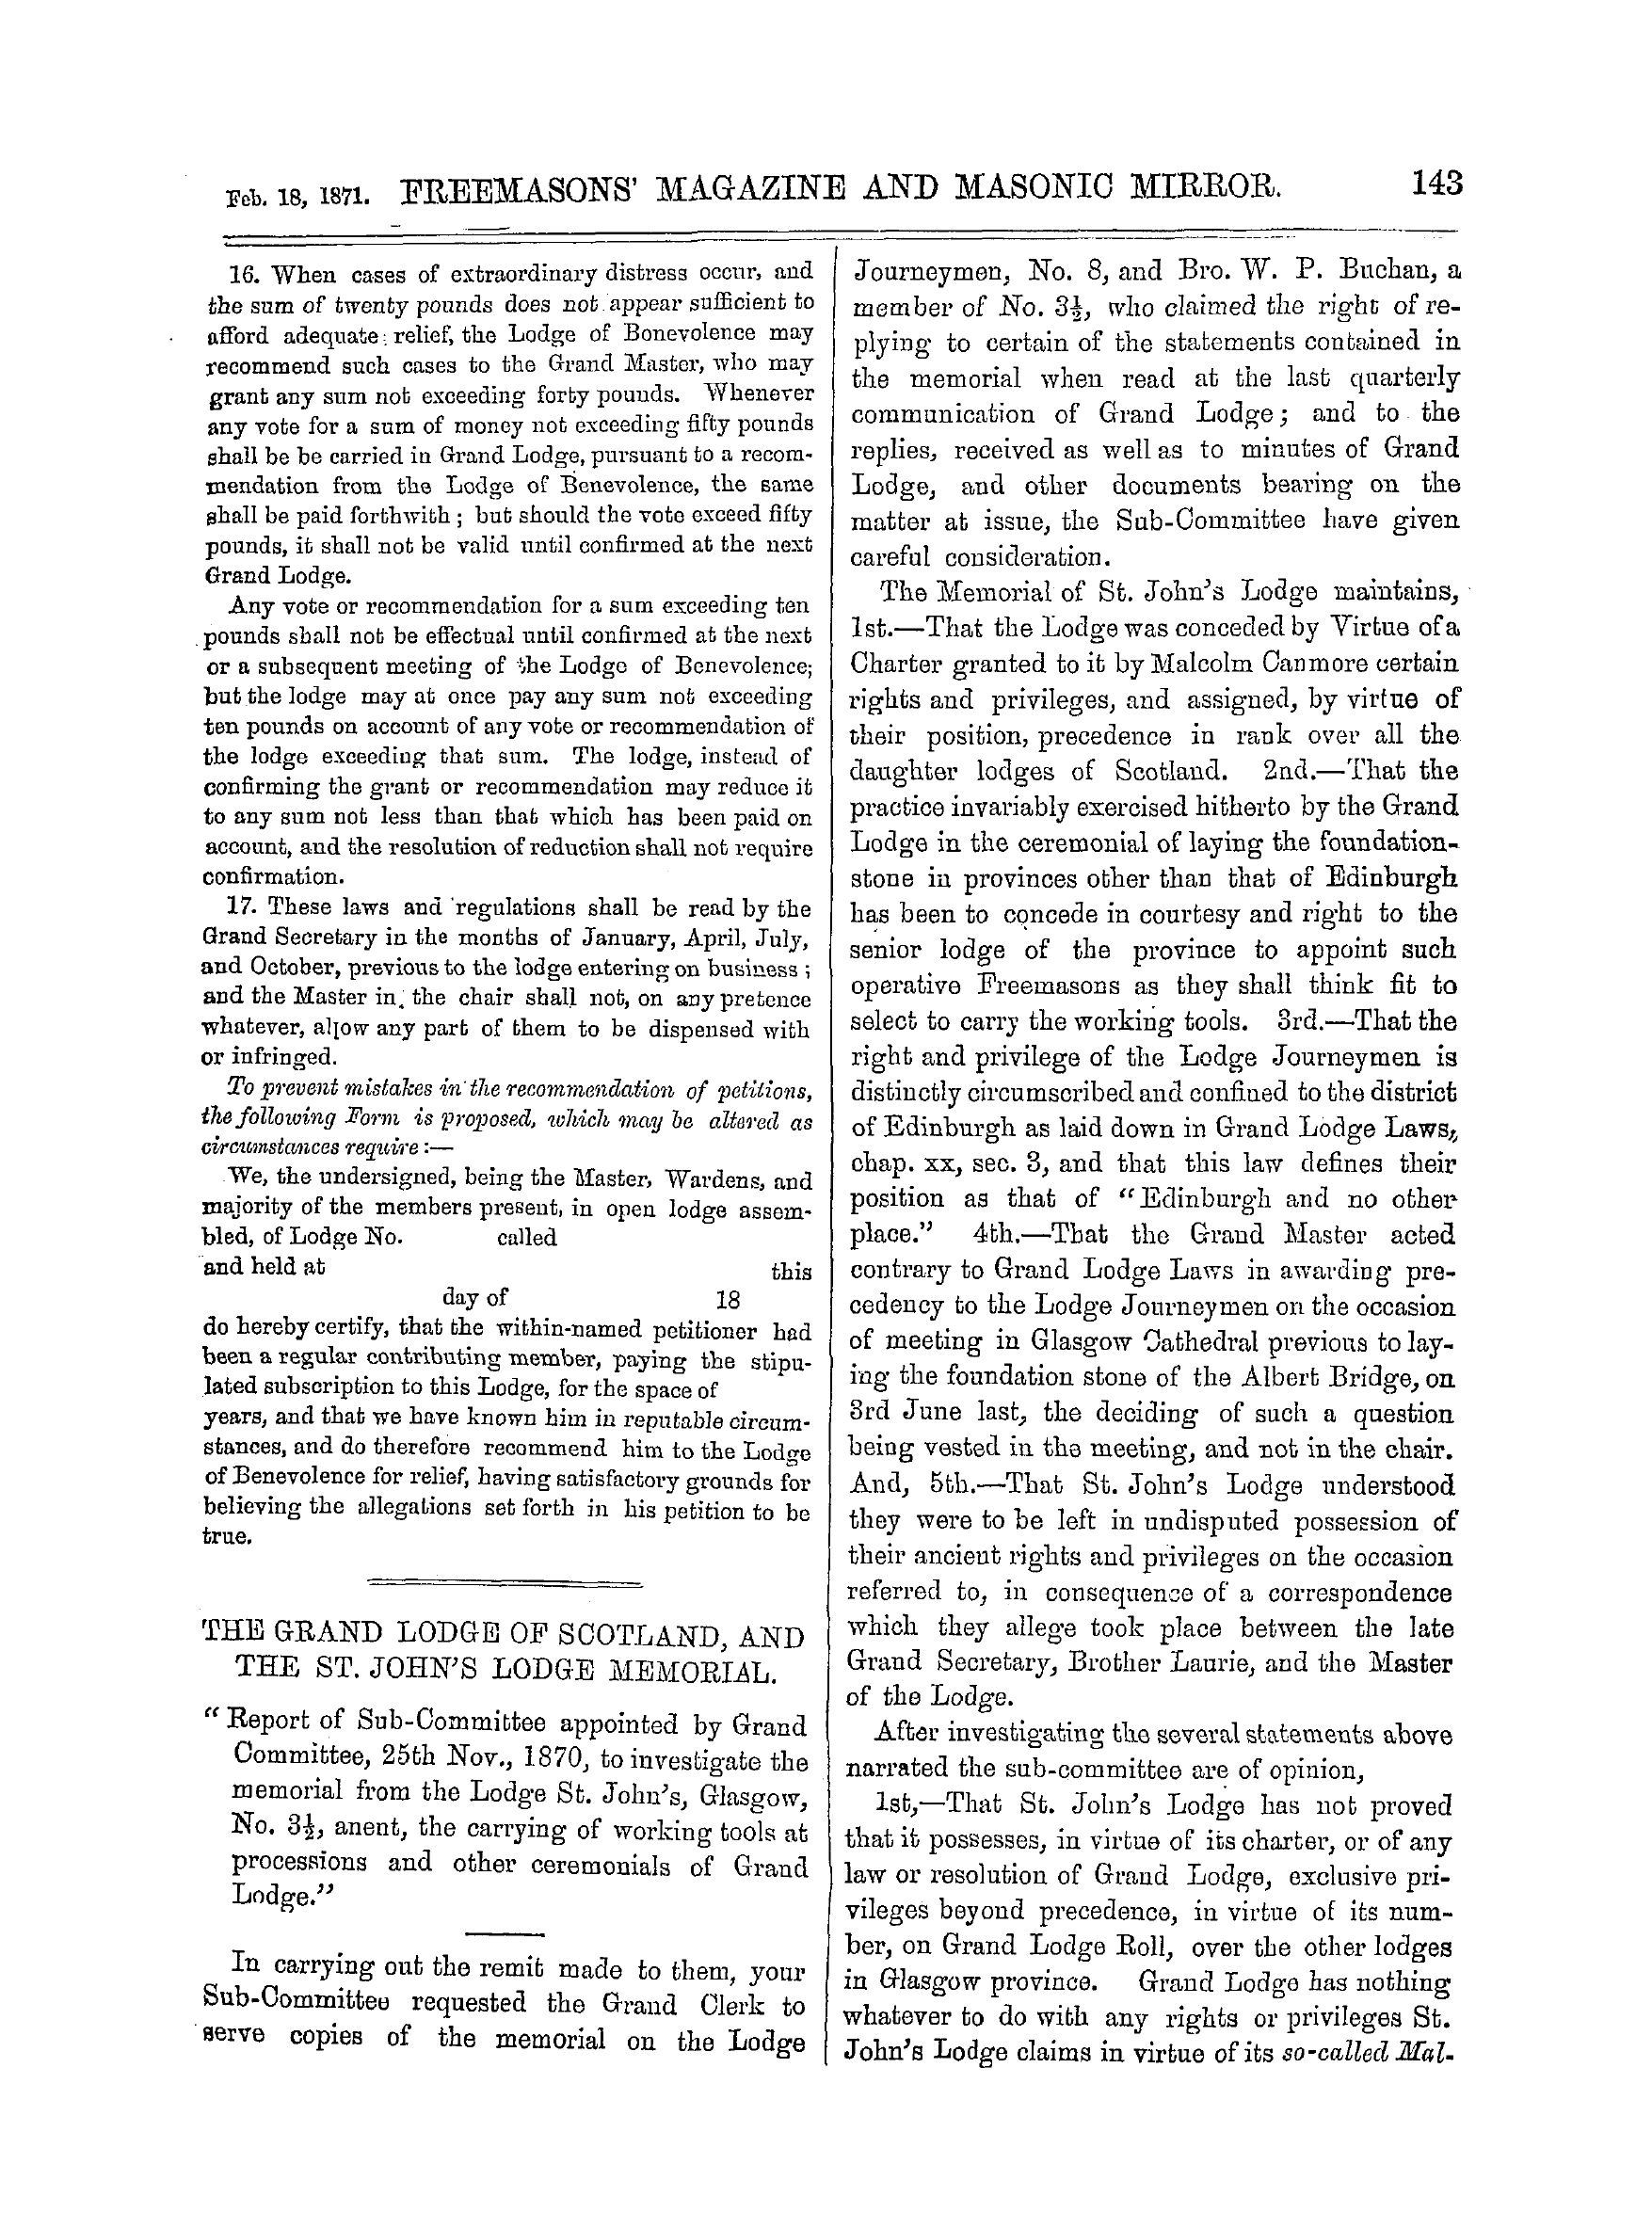 The Freemasons' Monthly Magazine: 1871-02-25 - The Fund Of Benevolence.